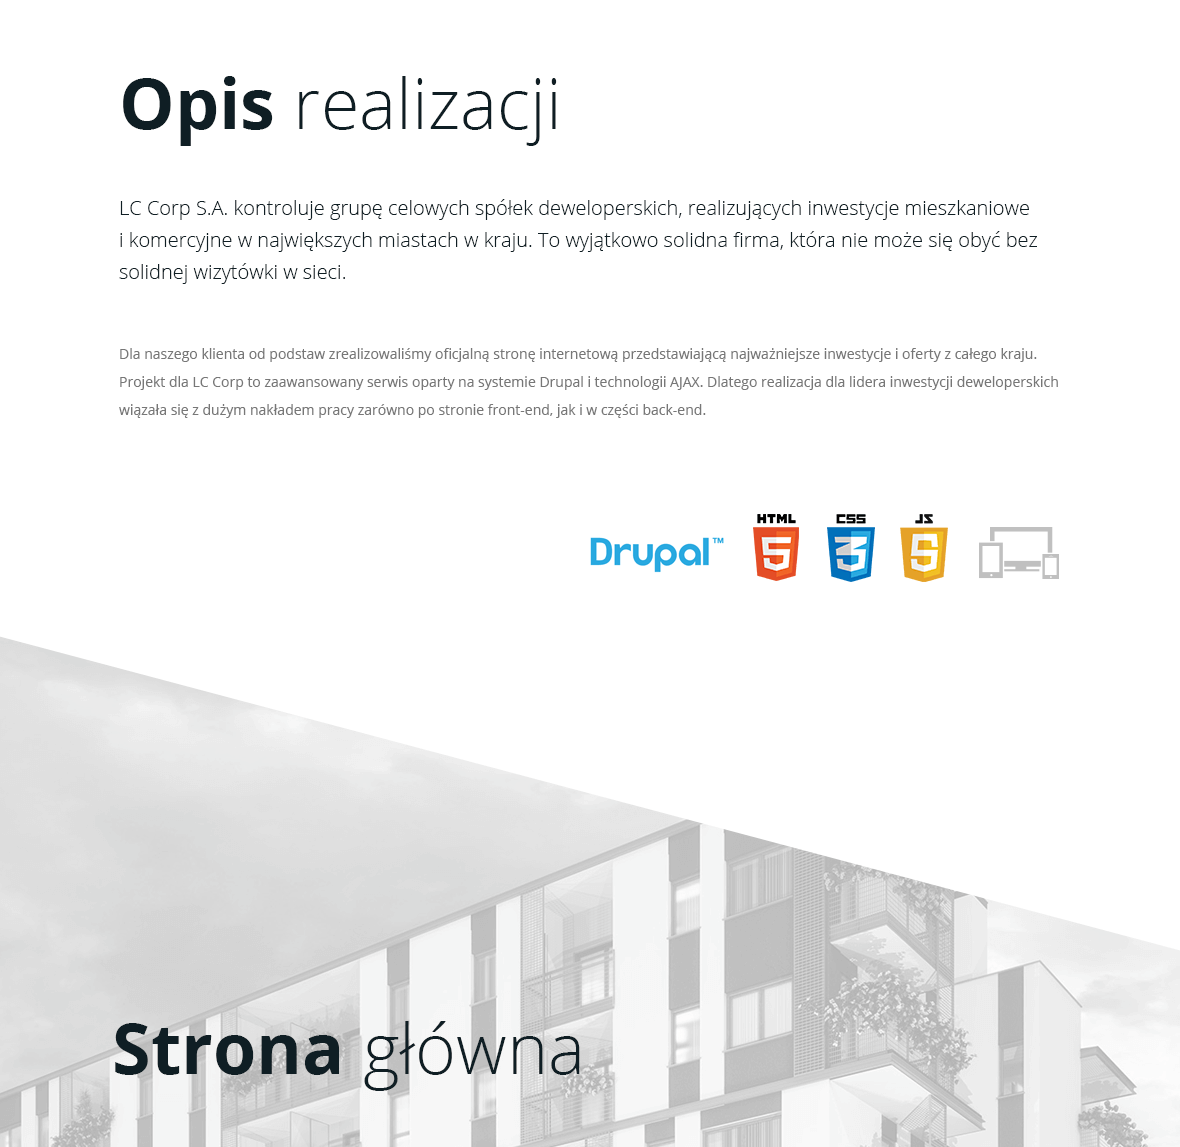 Website with Drupal system